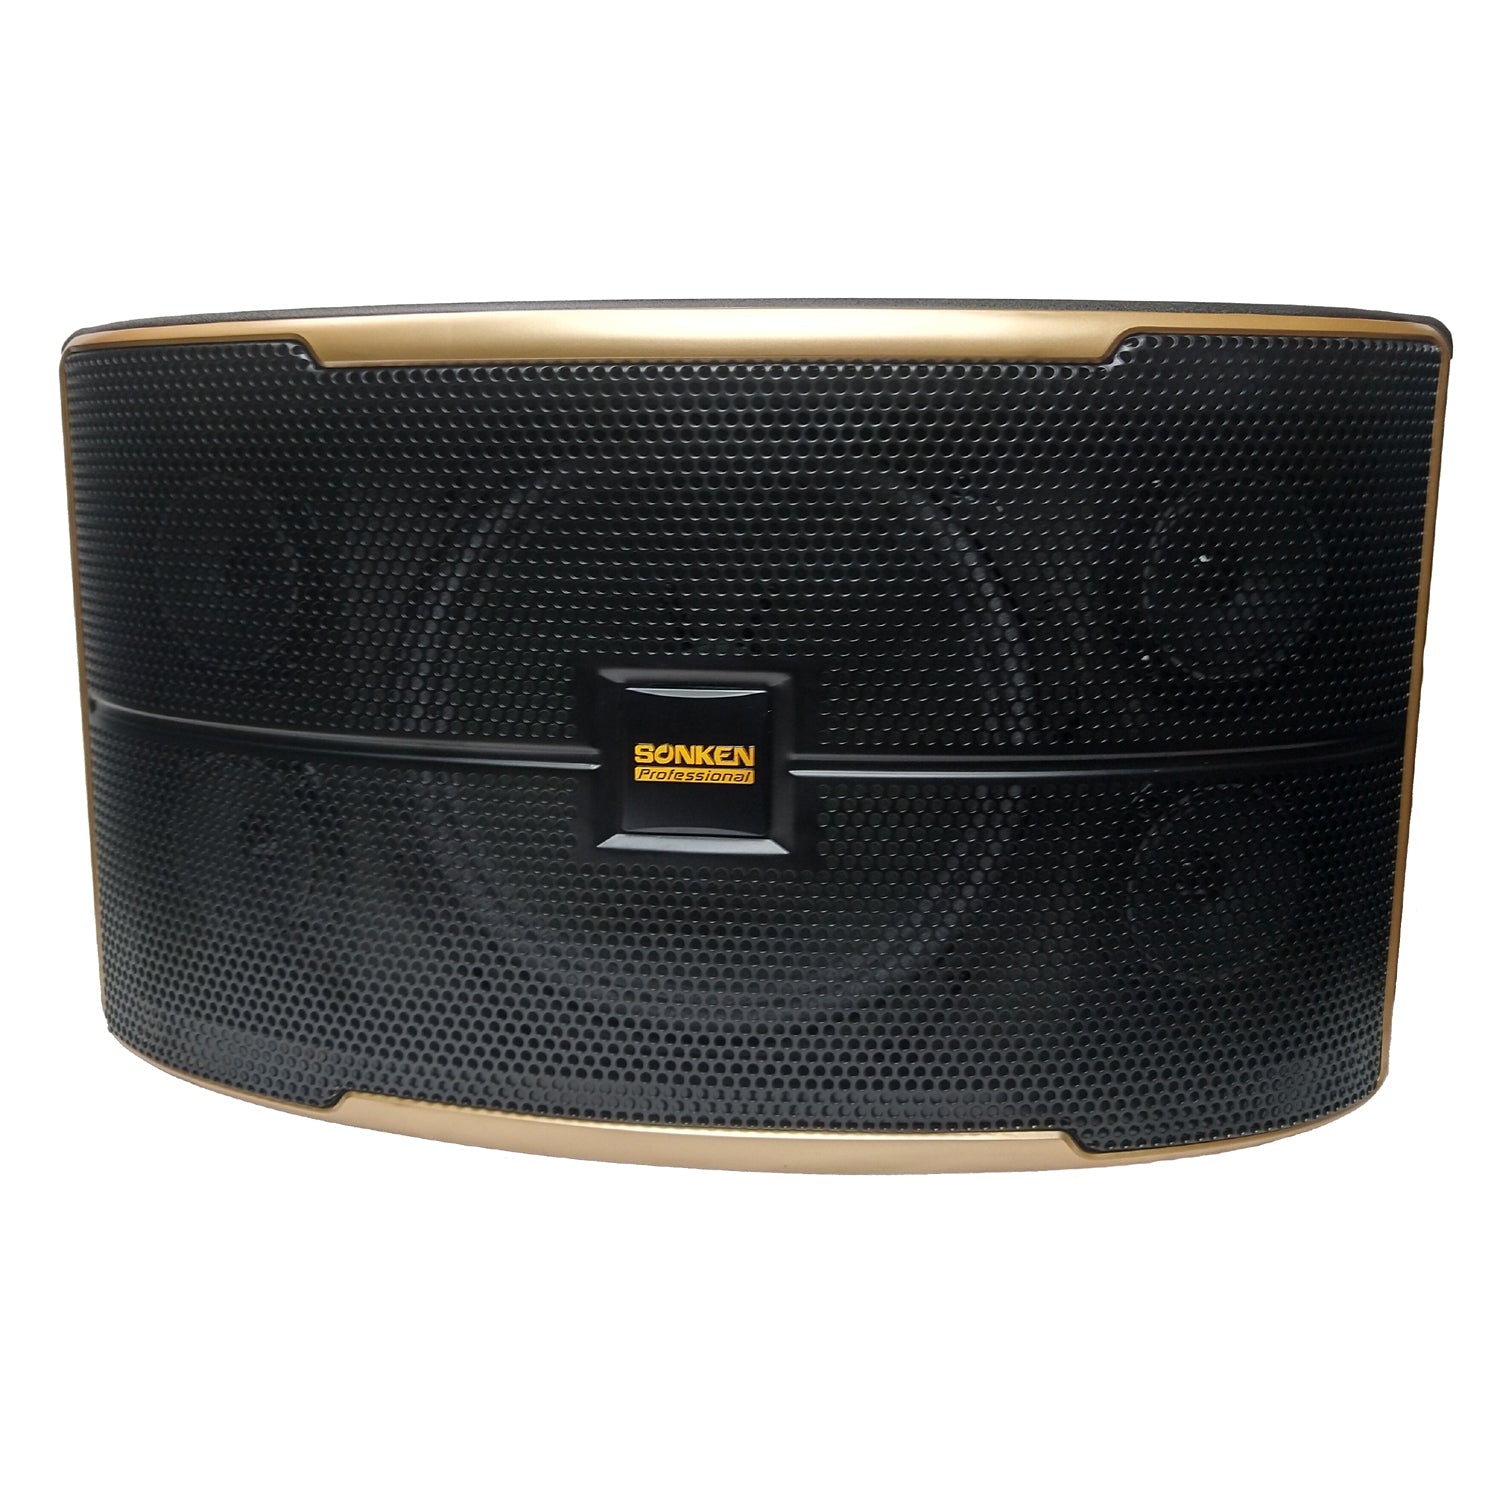 Sonken Home Karaoke Studio Package Deal (SA-710 Amp + CS-600 (10") Speakers + WM-800D Wireless Mics) - Karaoke Home Entertainment